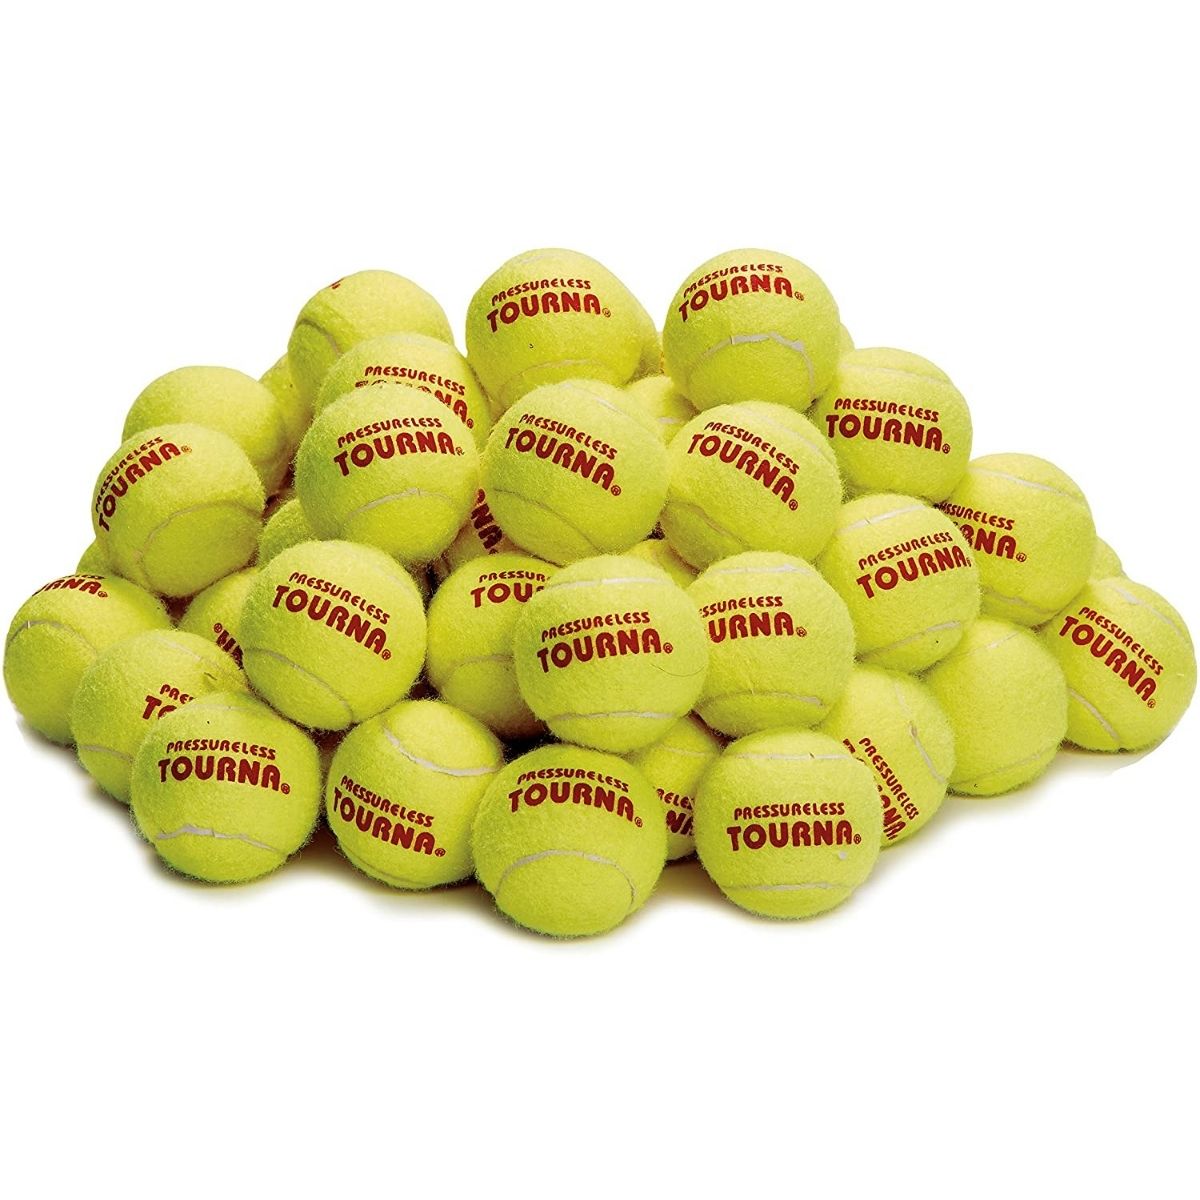 The Best Tennis Balls for Ball Machine Options: Tourna Pressureless Tennis Ball 60 Count